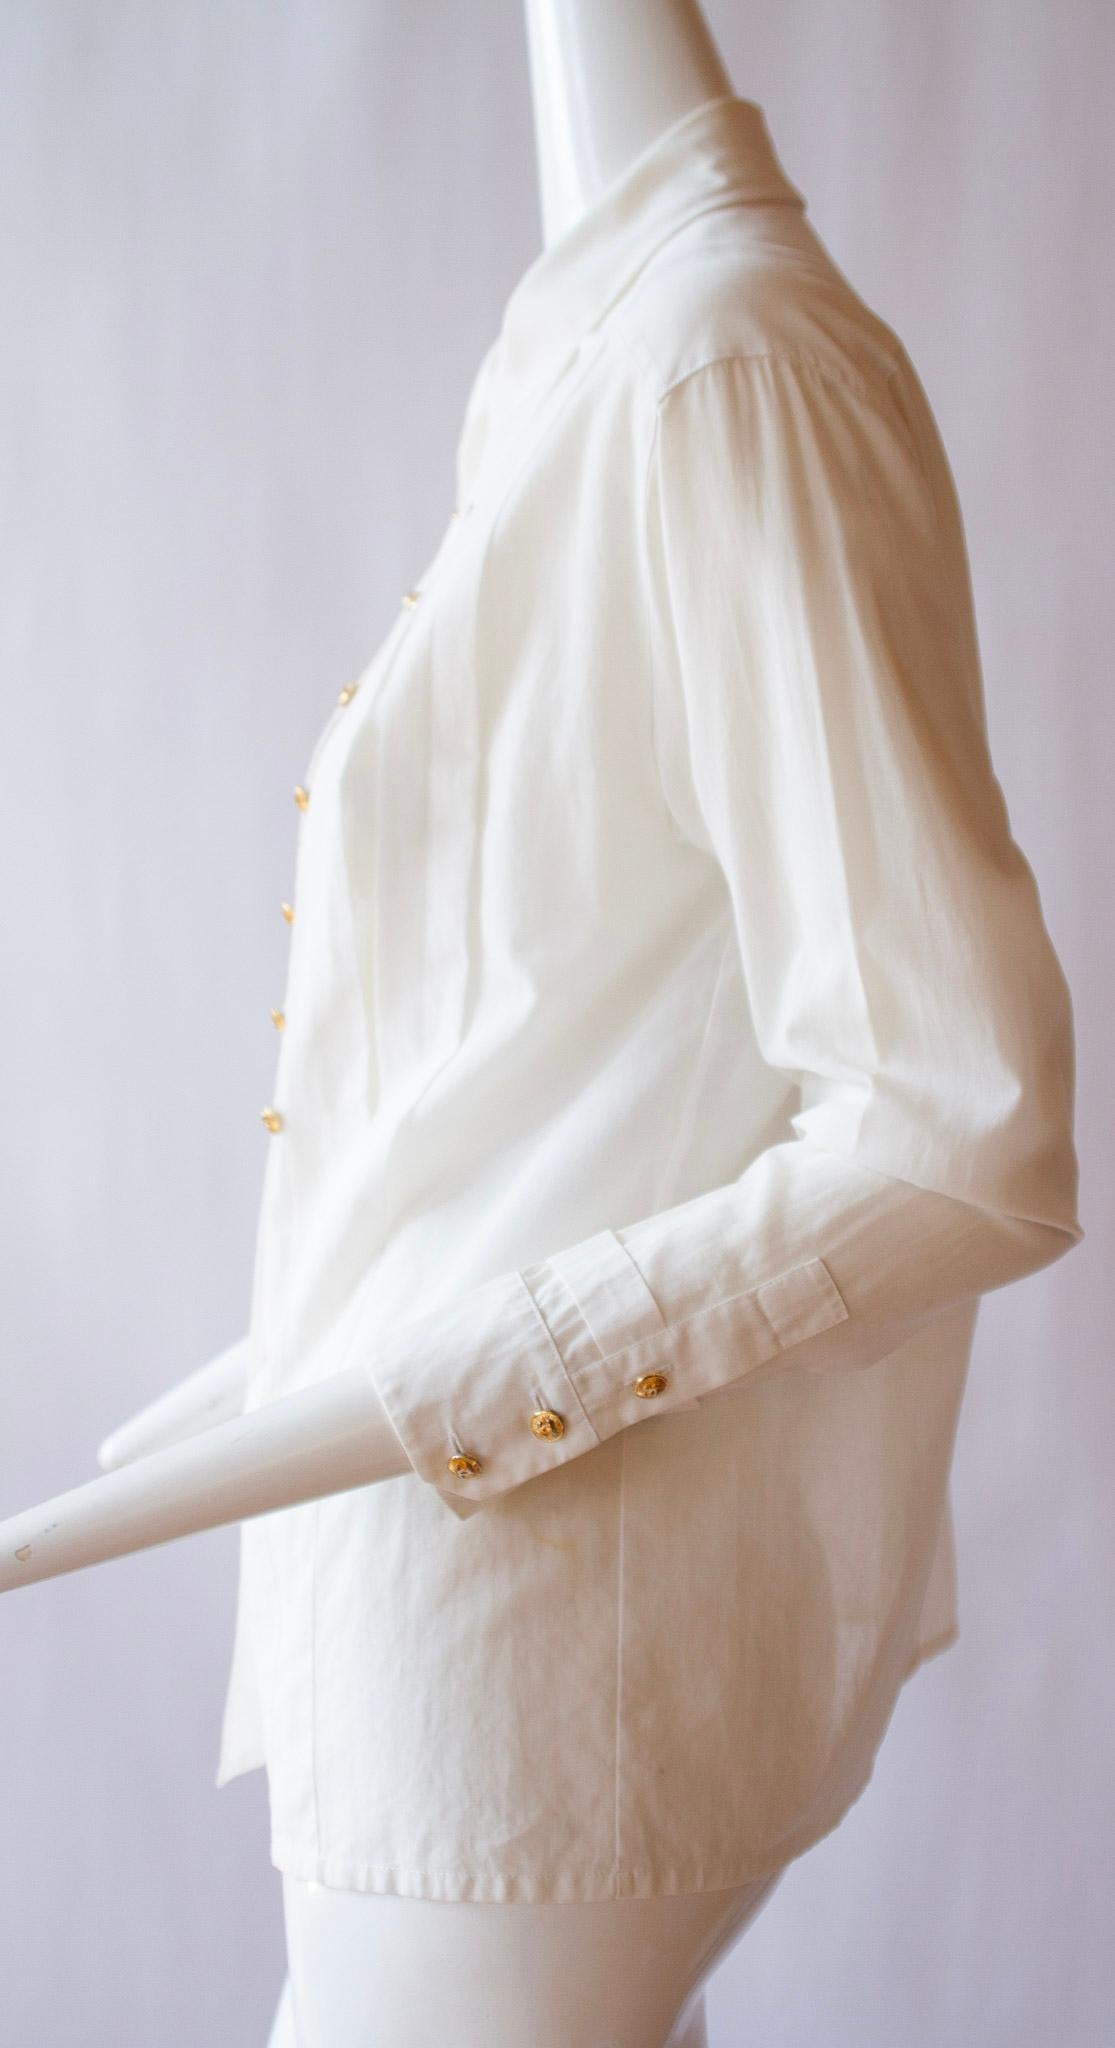 1980s Chanel Boutique Unisex White Tuxedo Shirt  For Sale 1